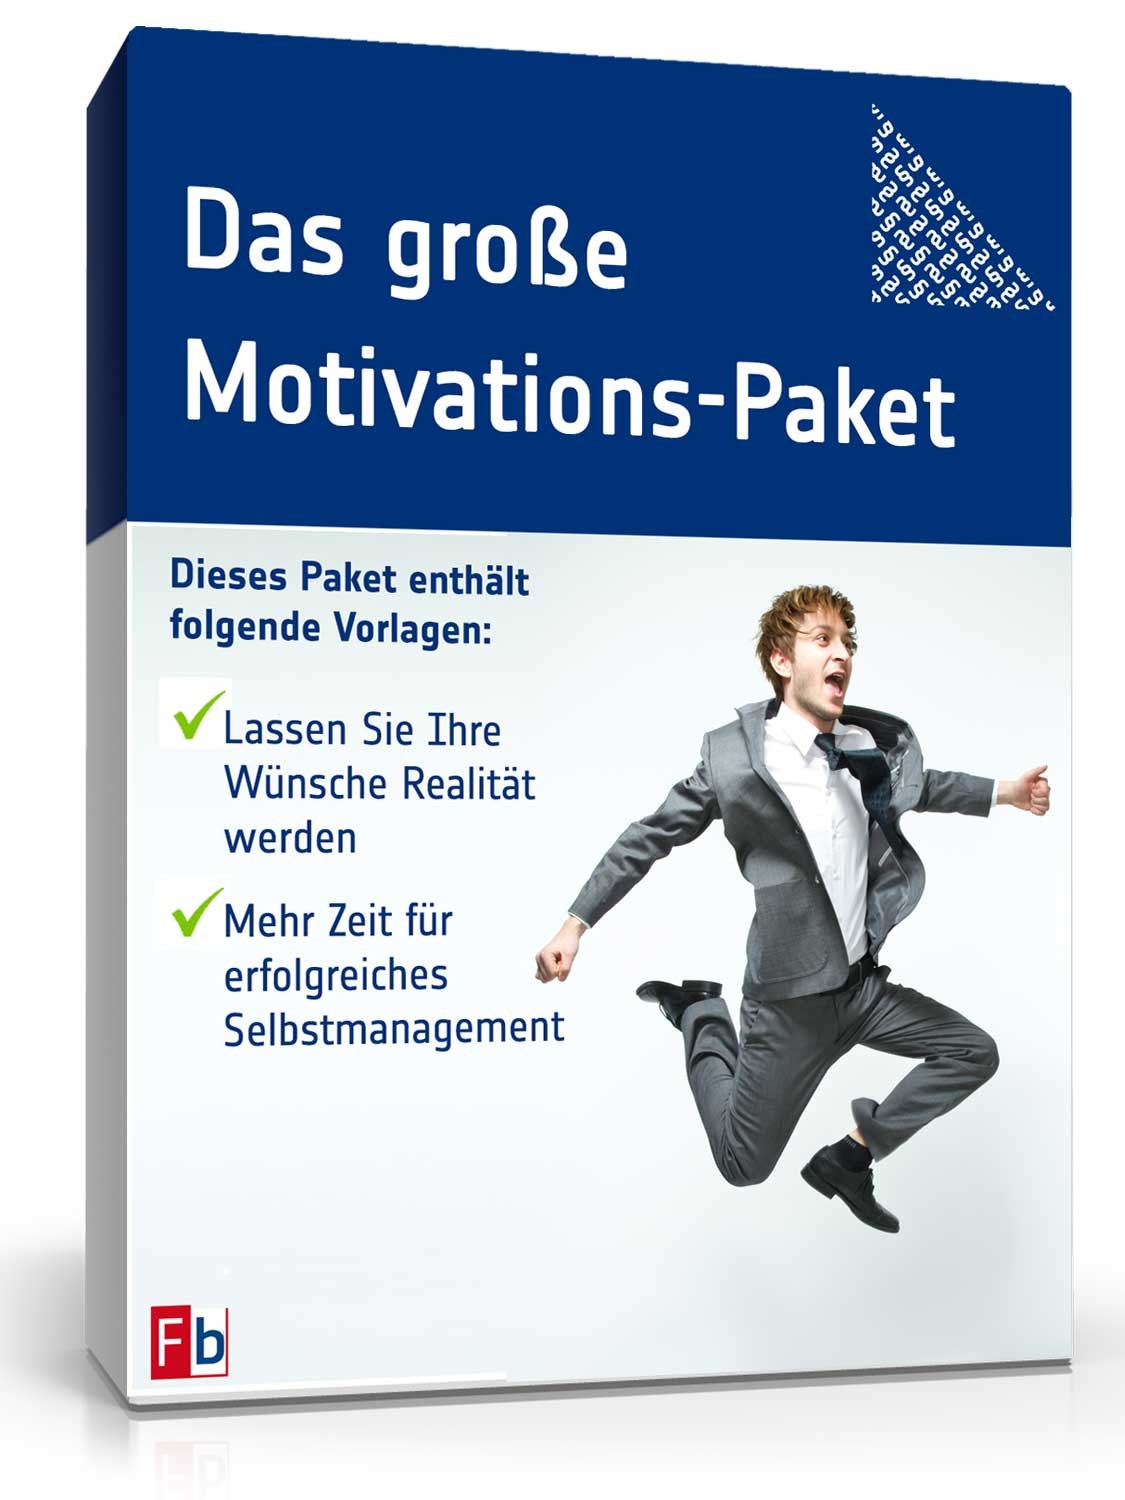 Hauptbild des Produkts: Großes Motivations-Paket 